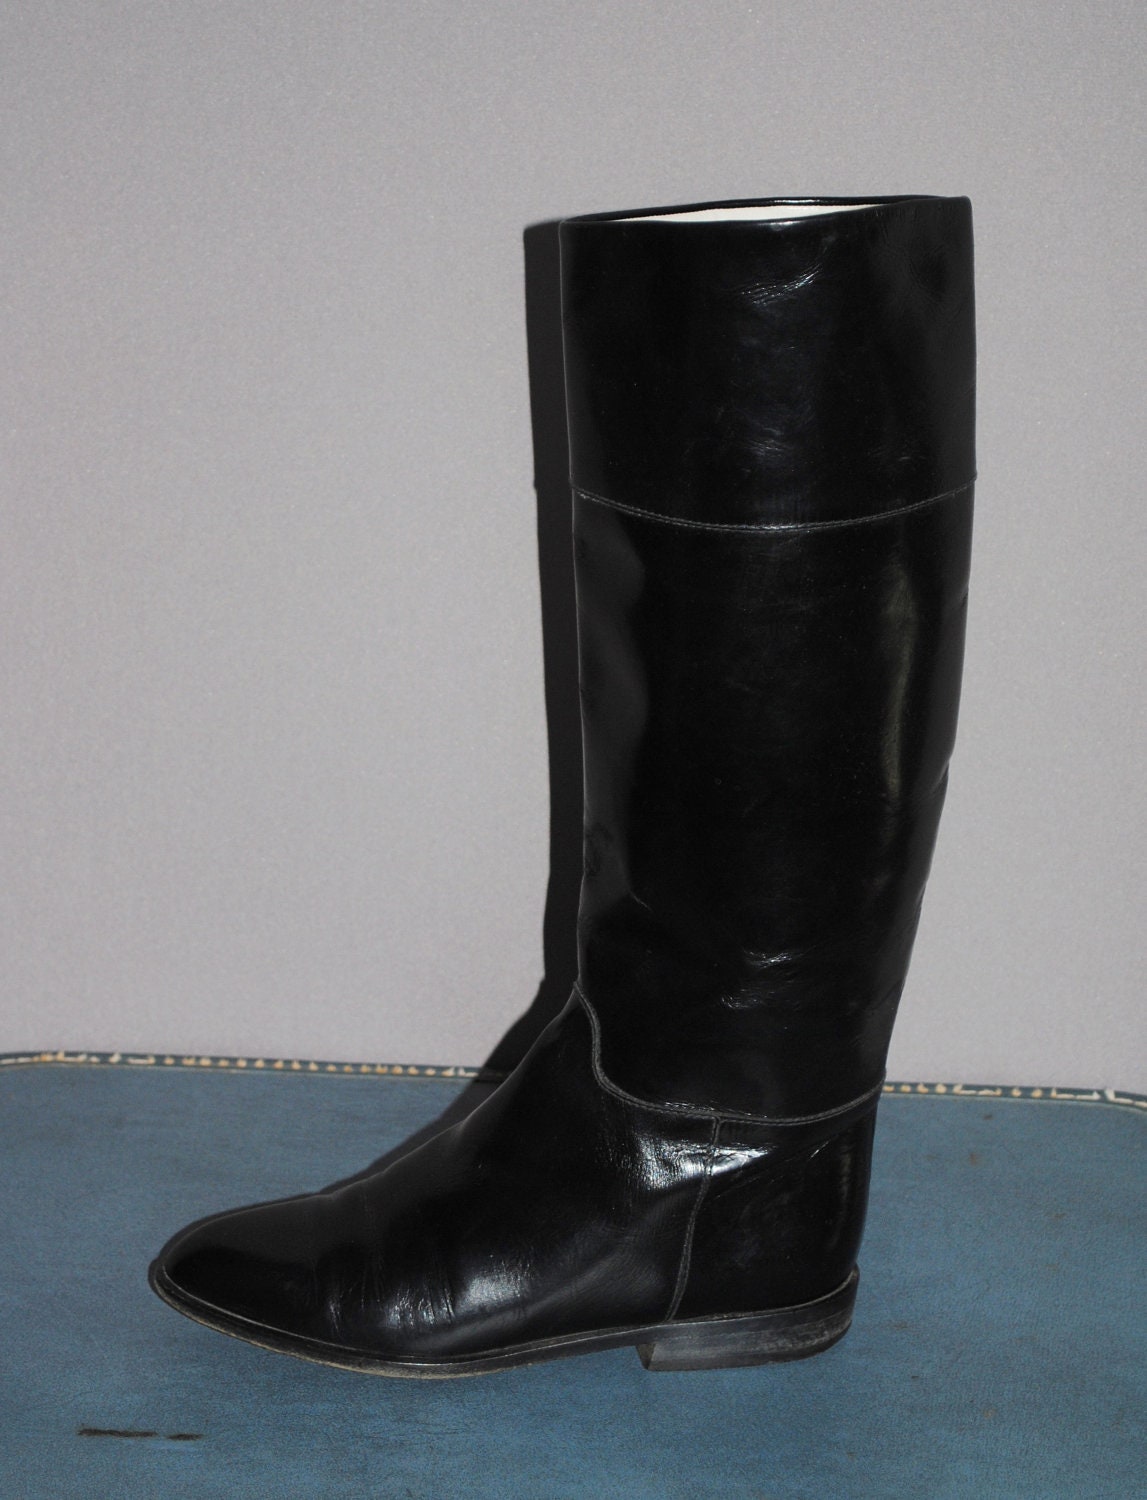 Fine Black ITALIAN LEATHER Boots. Women's Size 7 Euro